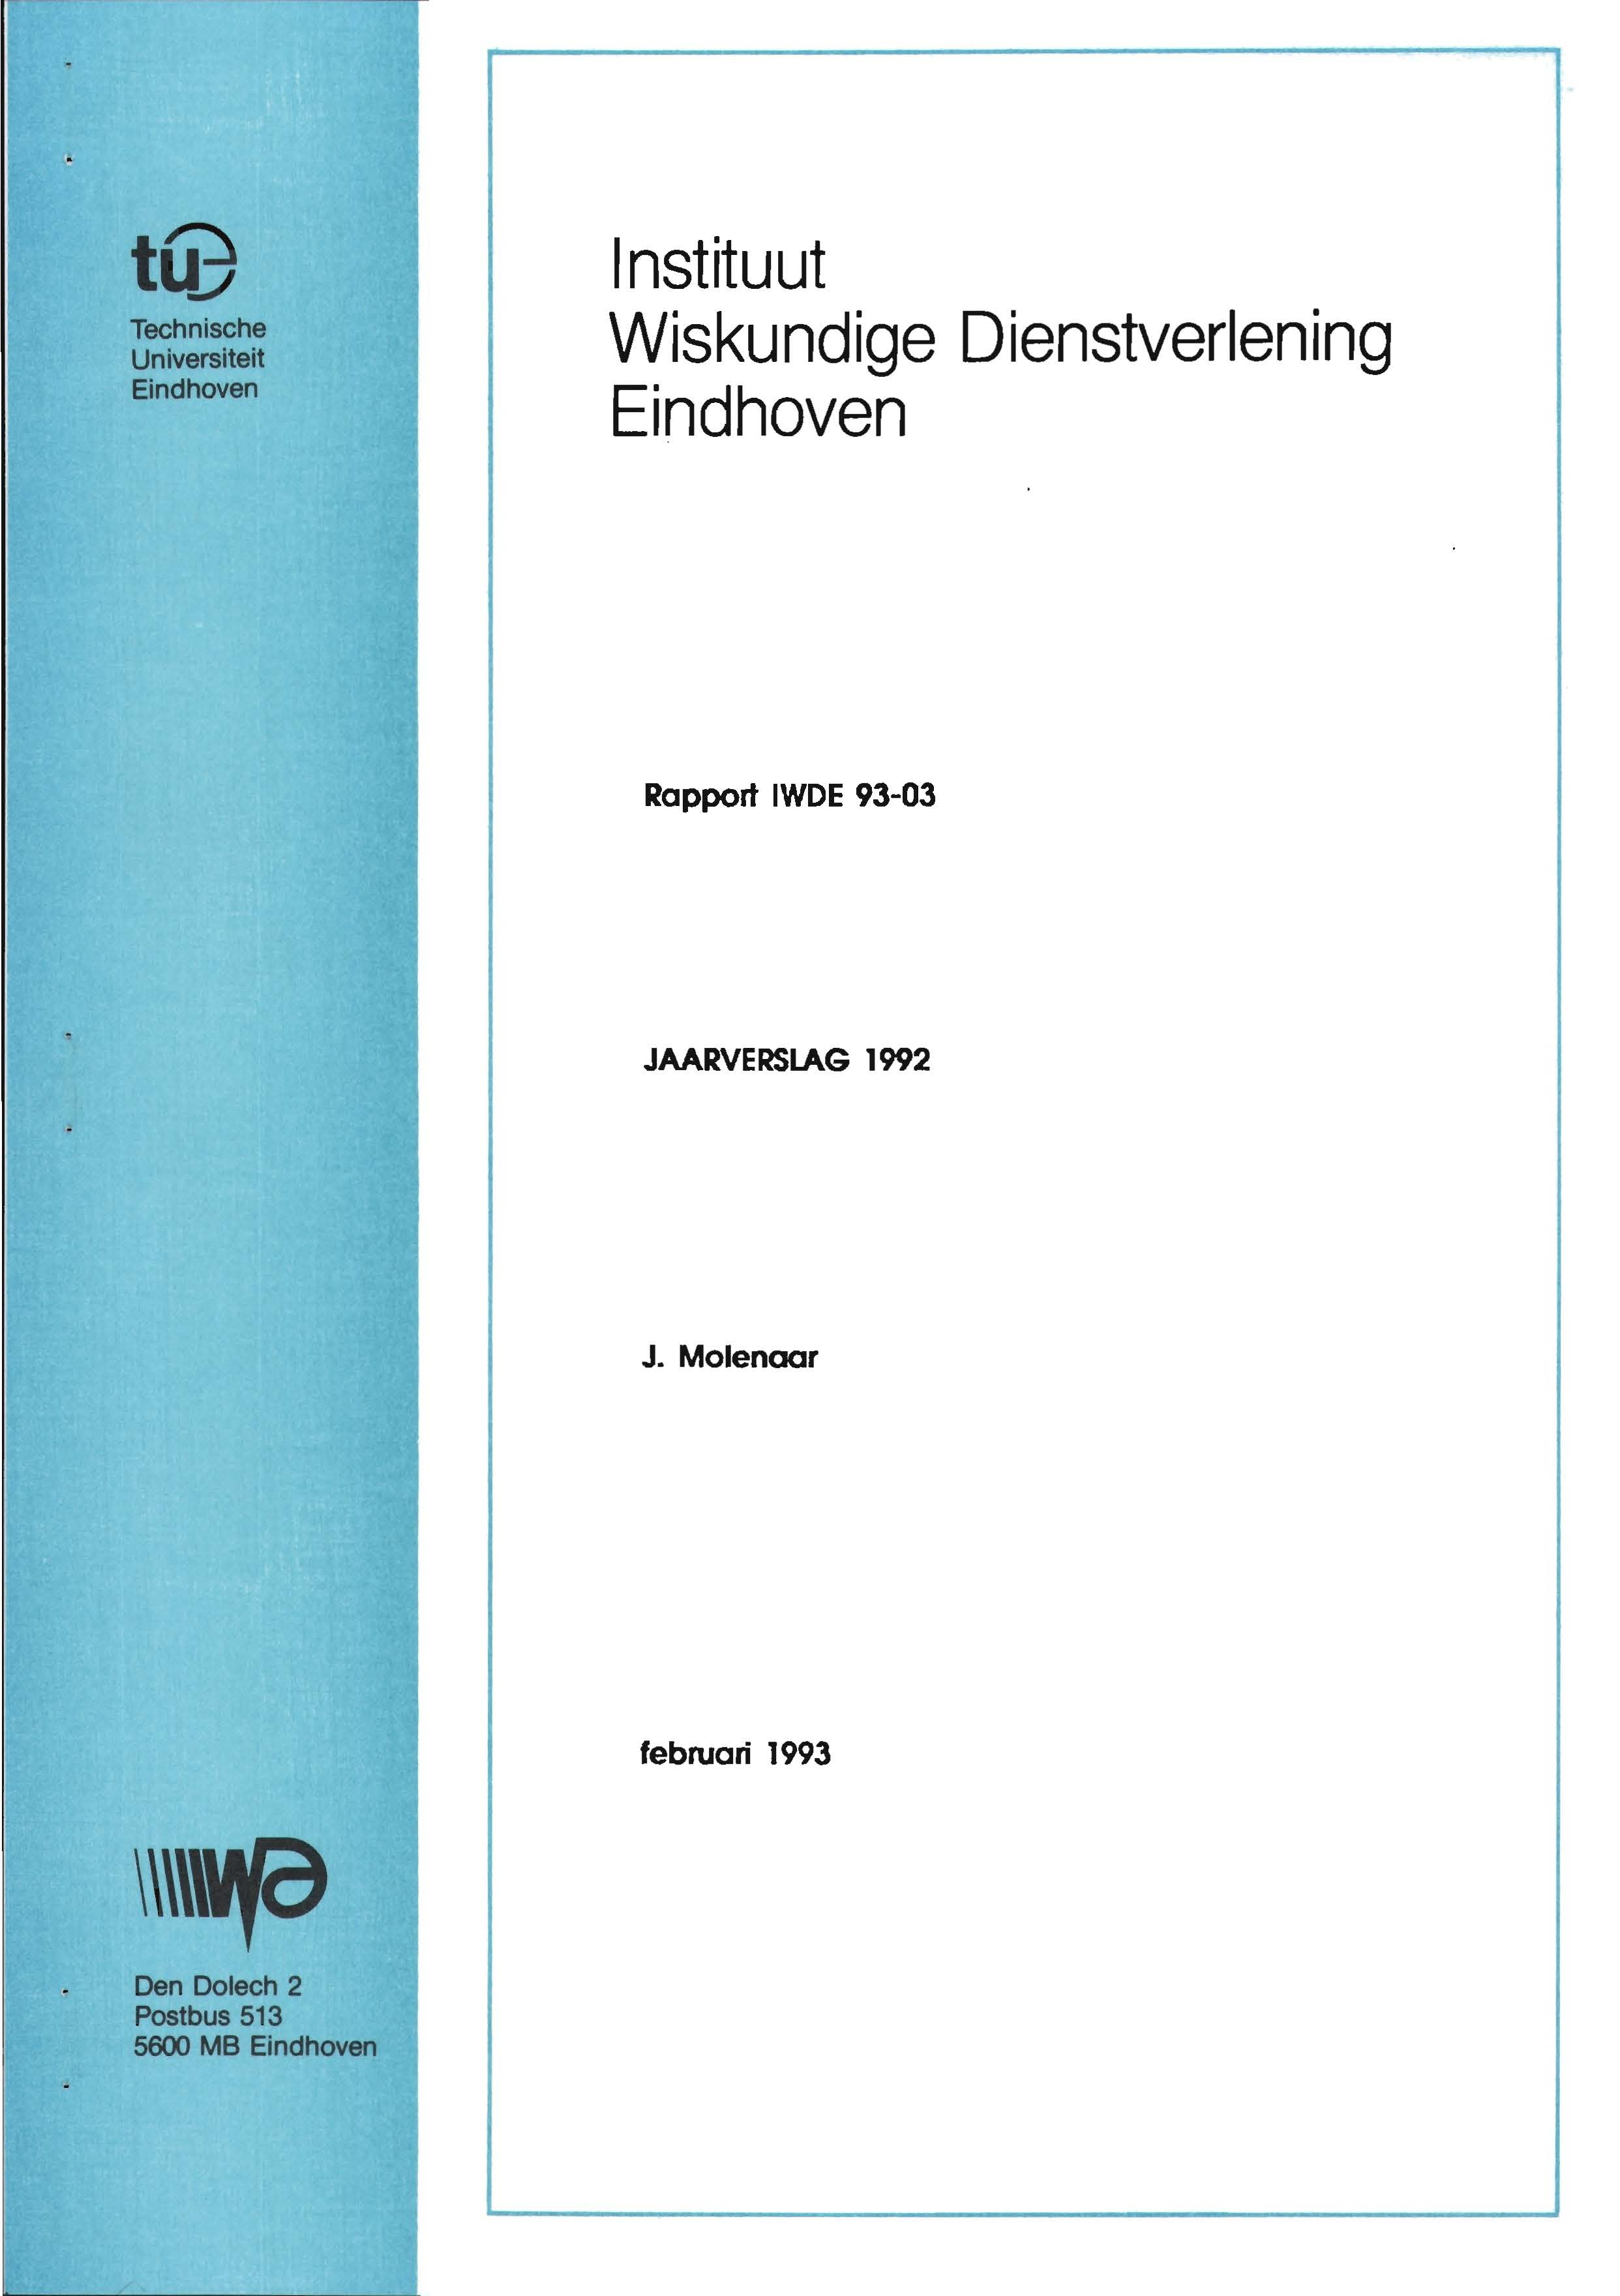 t(j) Technische Universiteit Eindhoven lnstituut Wiskundige Dienstverlening Eindhoven Rapport IWDE